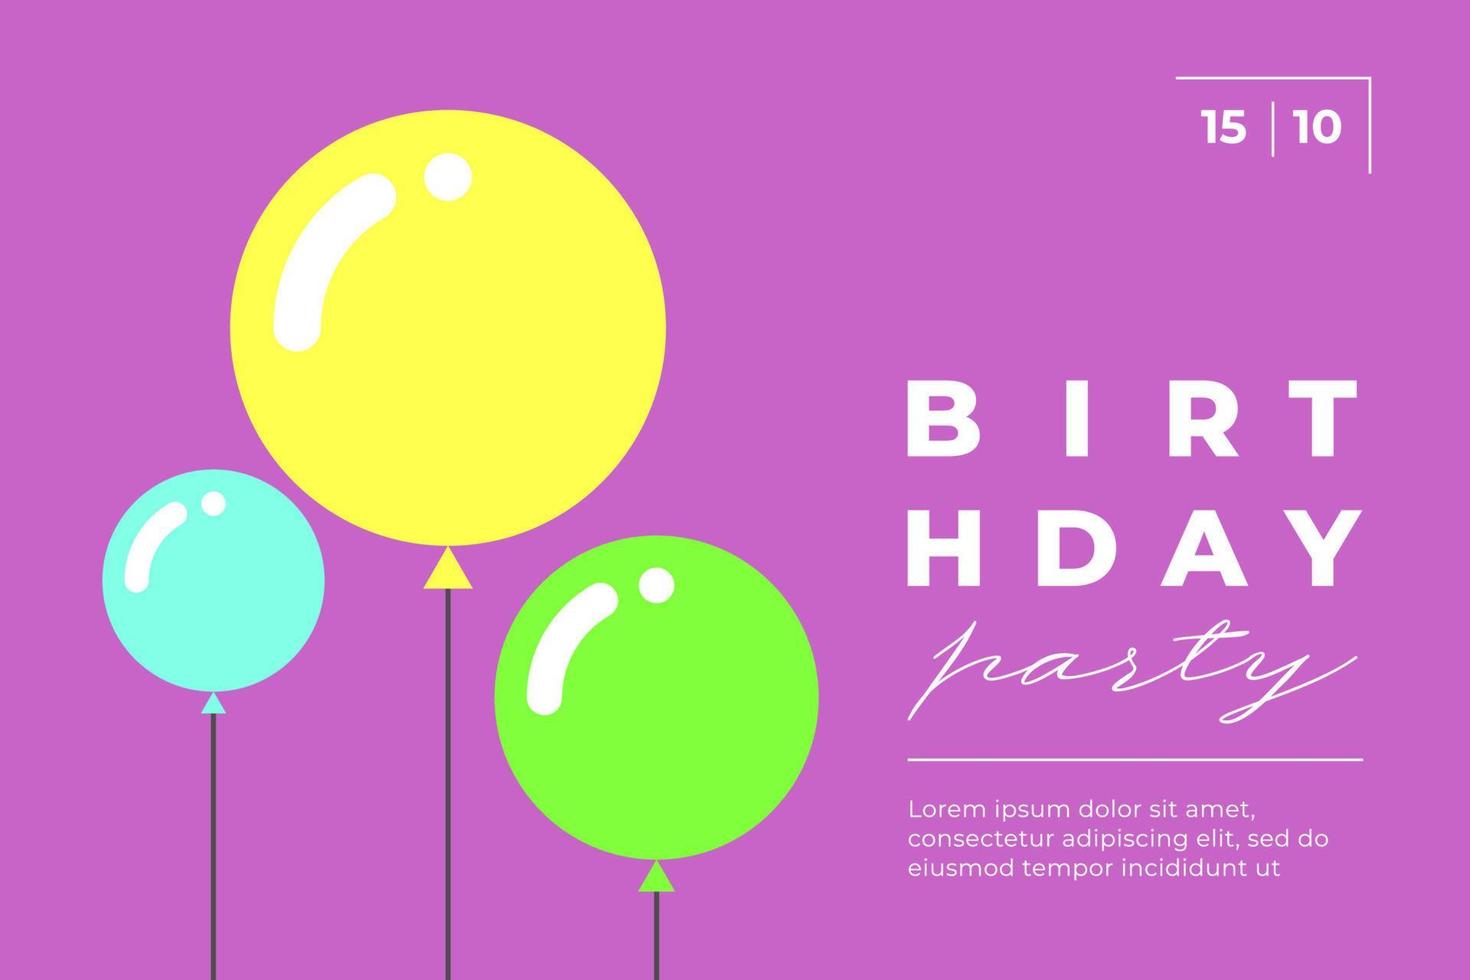 födelsedagsfest hälsning minimal trendiga horisontella inbjudan affisch. firande händelse minimalistisk kreativ design kort med ballonger. glad semester enkel platt vektor eps plakat